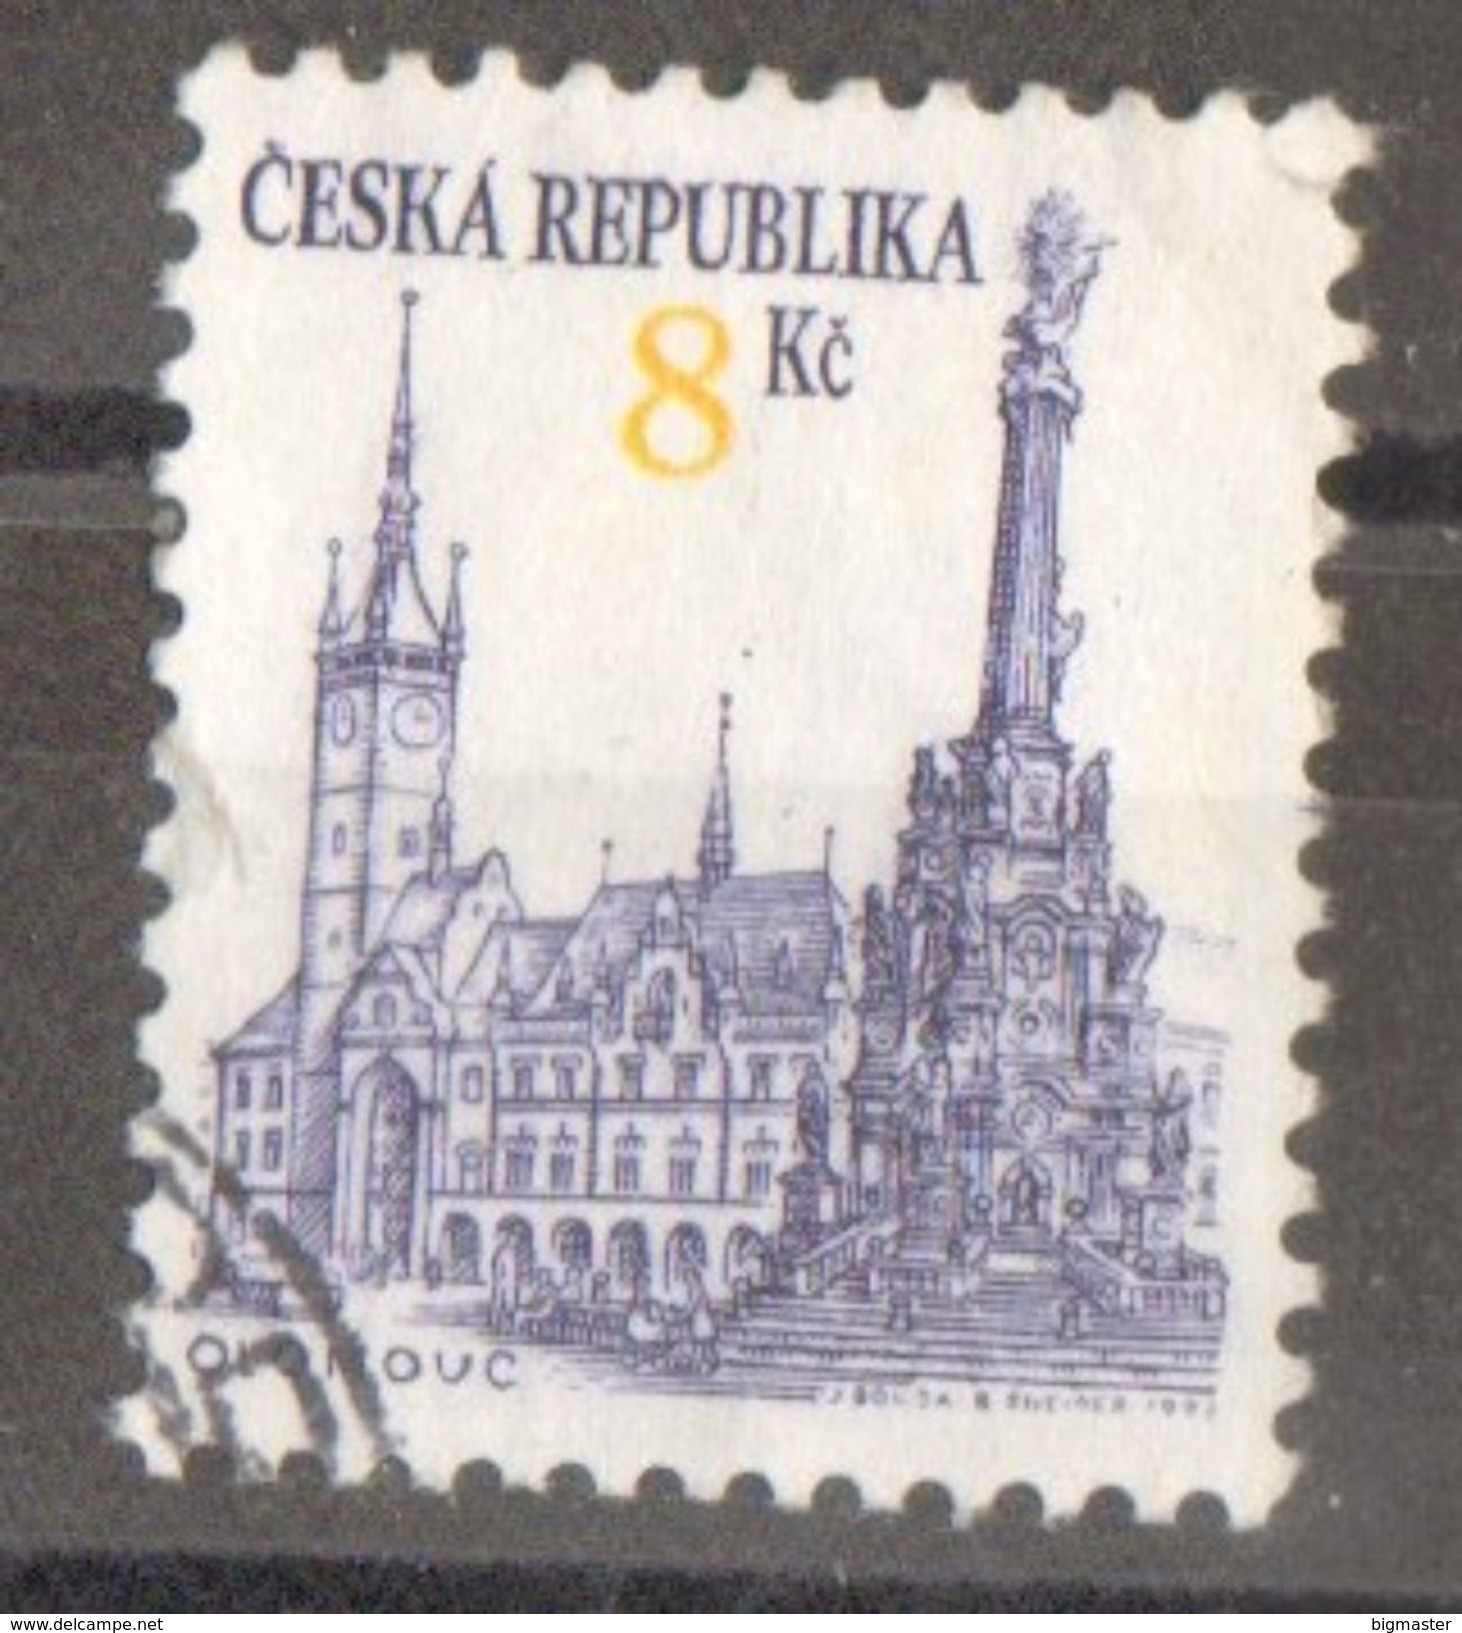 Repubblica Ceca 1993 Olomouc (UNESCO World Heritage Site) Fu - Gebraucht